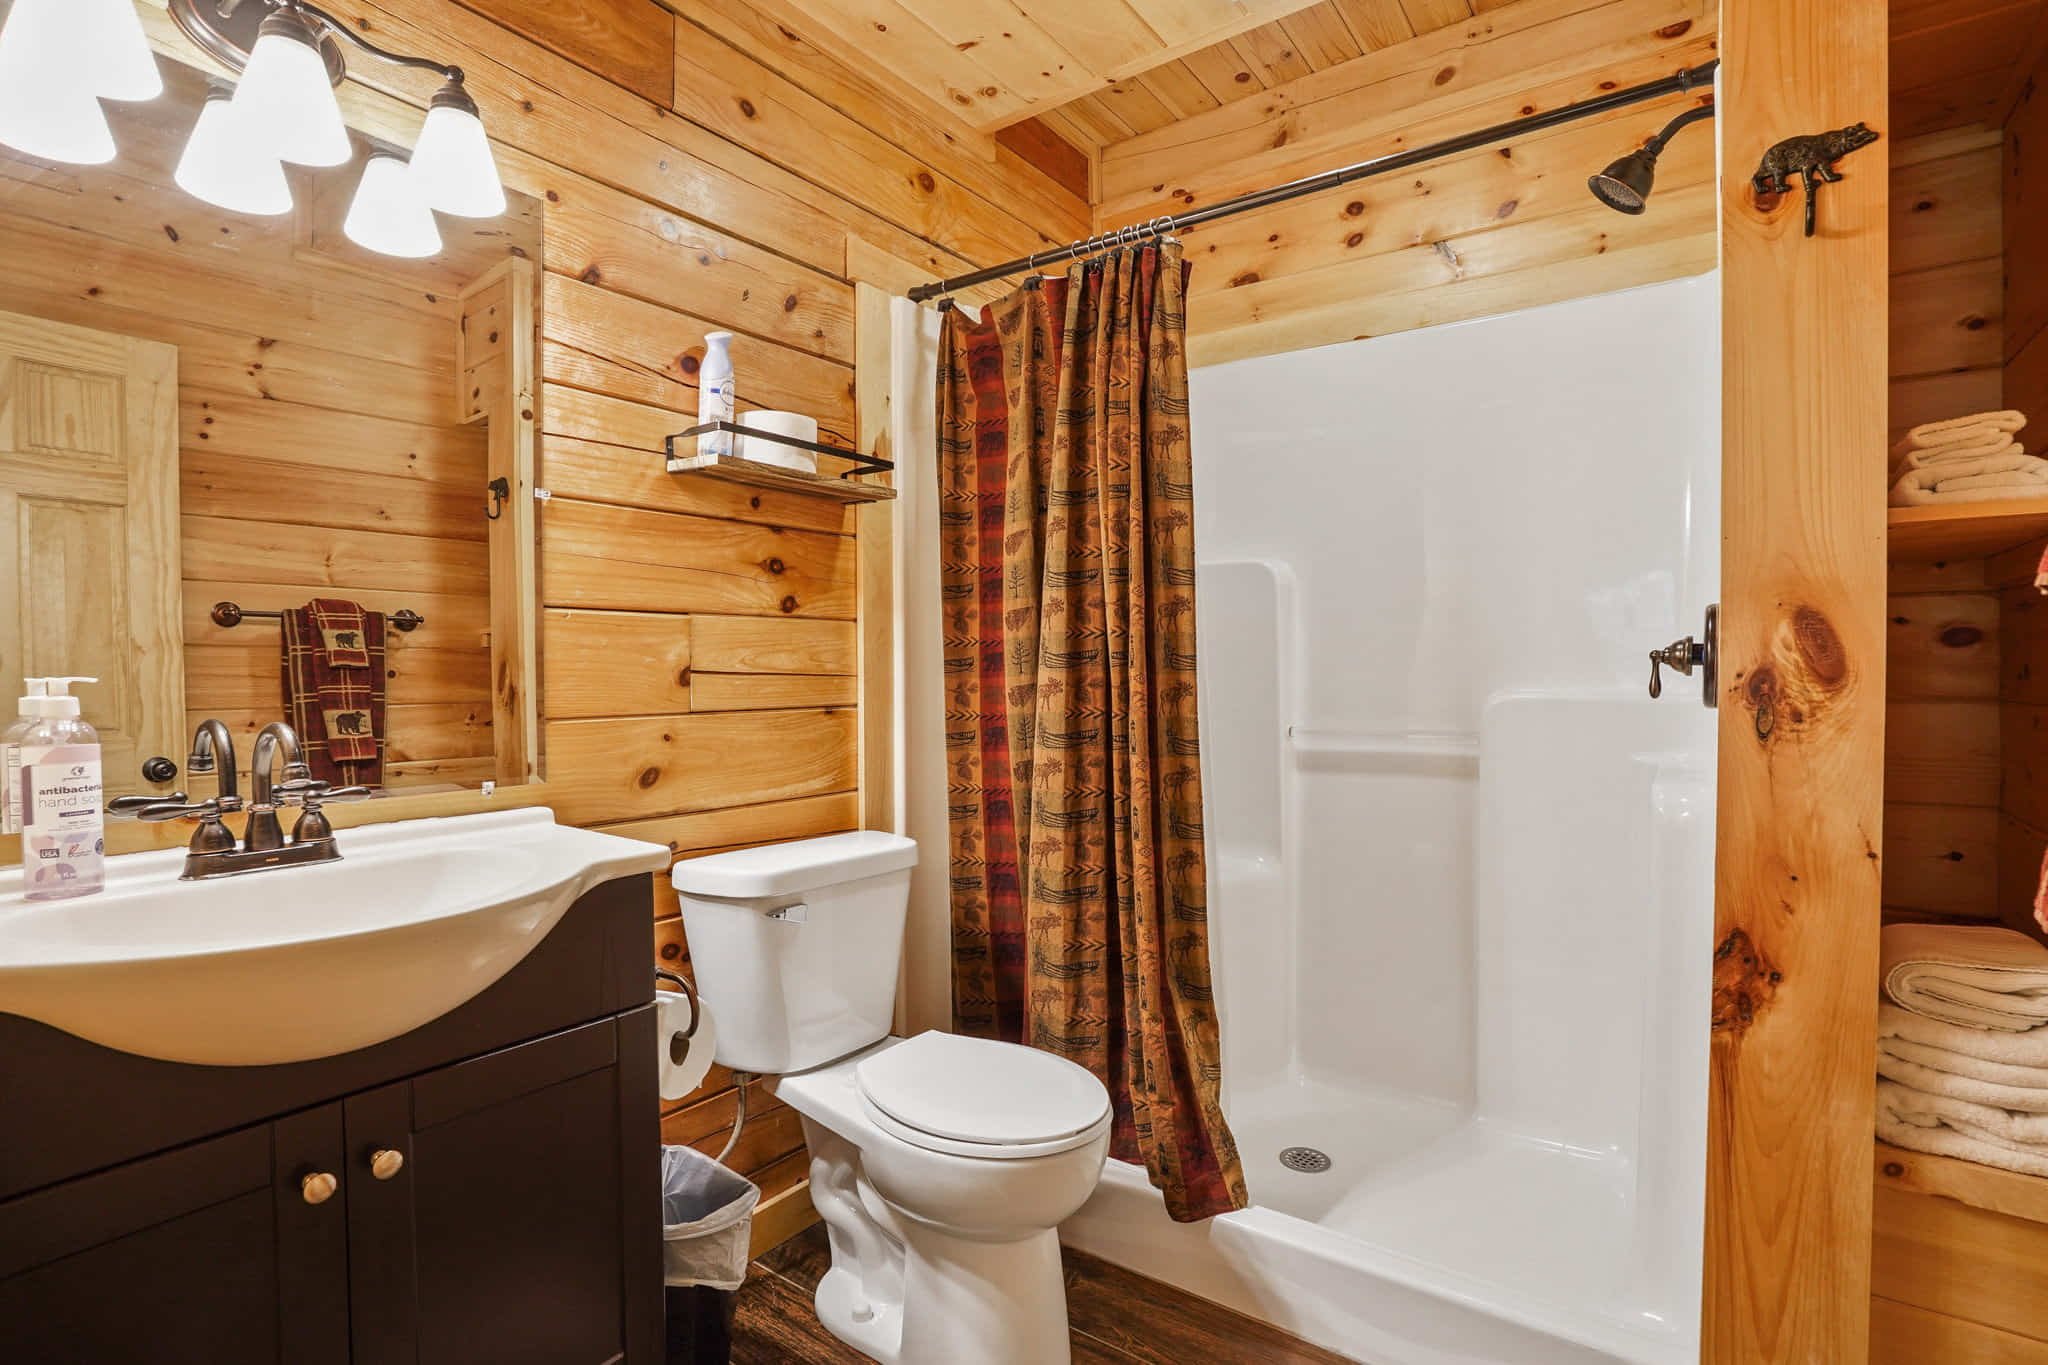 Bathroom of River Rock Lodge in Hocking Hills ohio